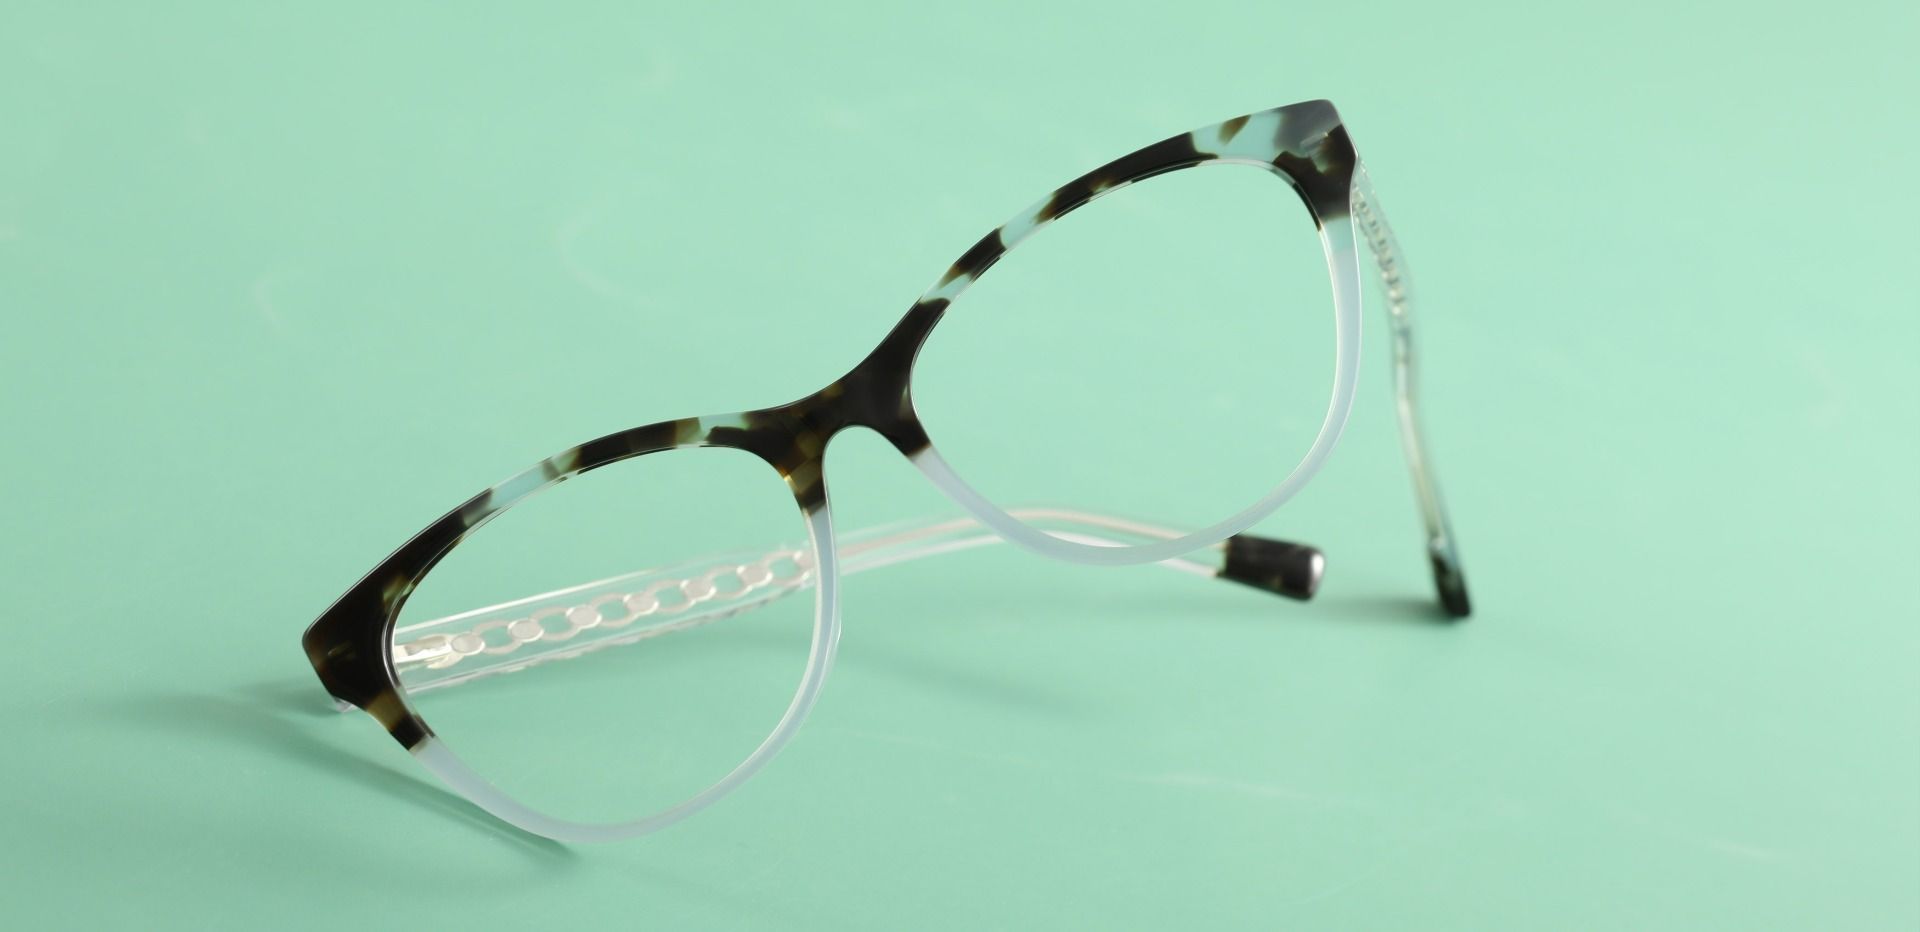 Knoxville Cat Eye Prescription Glasses - Two